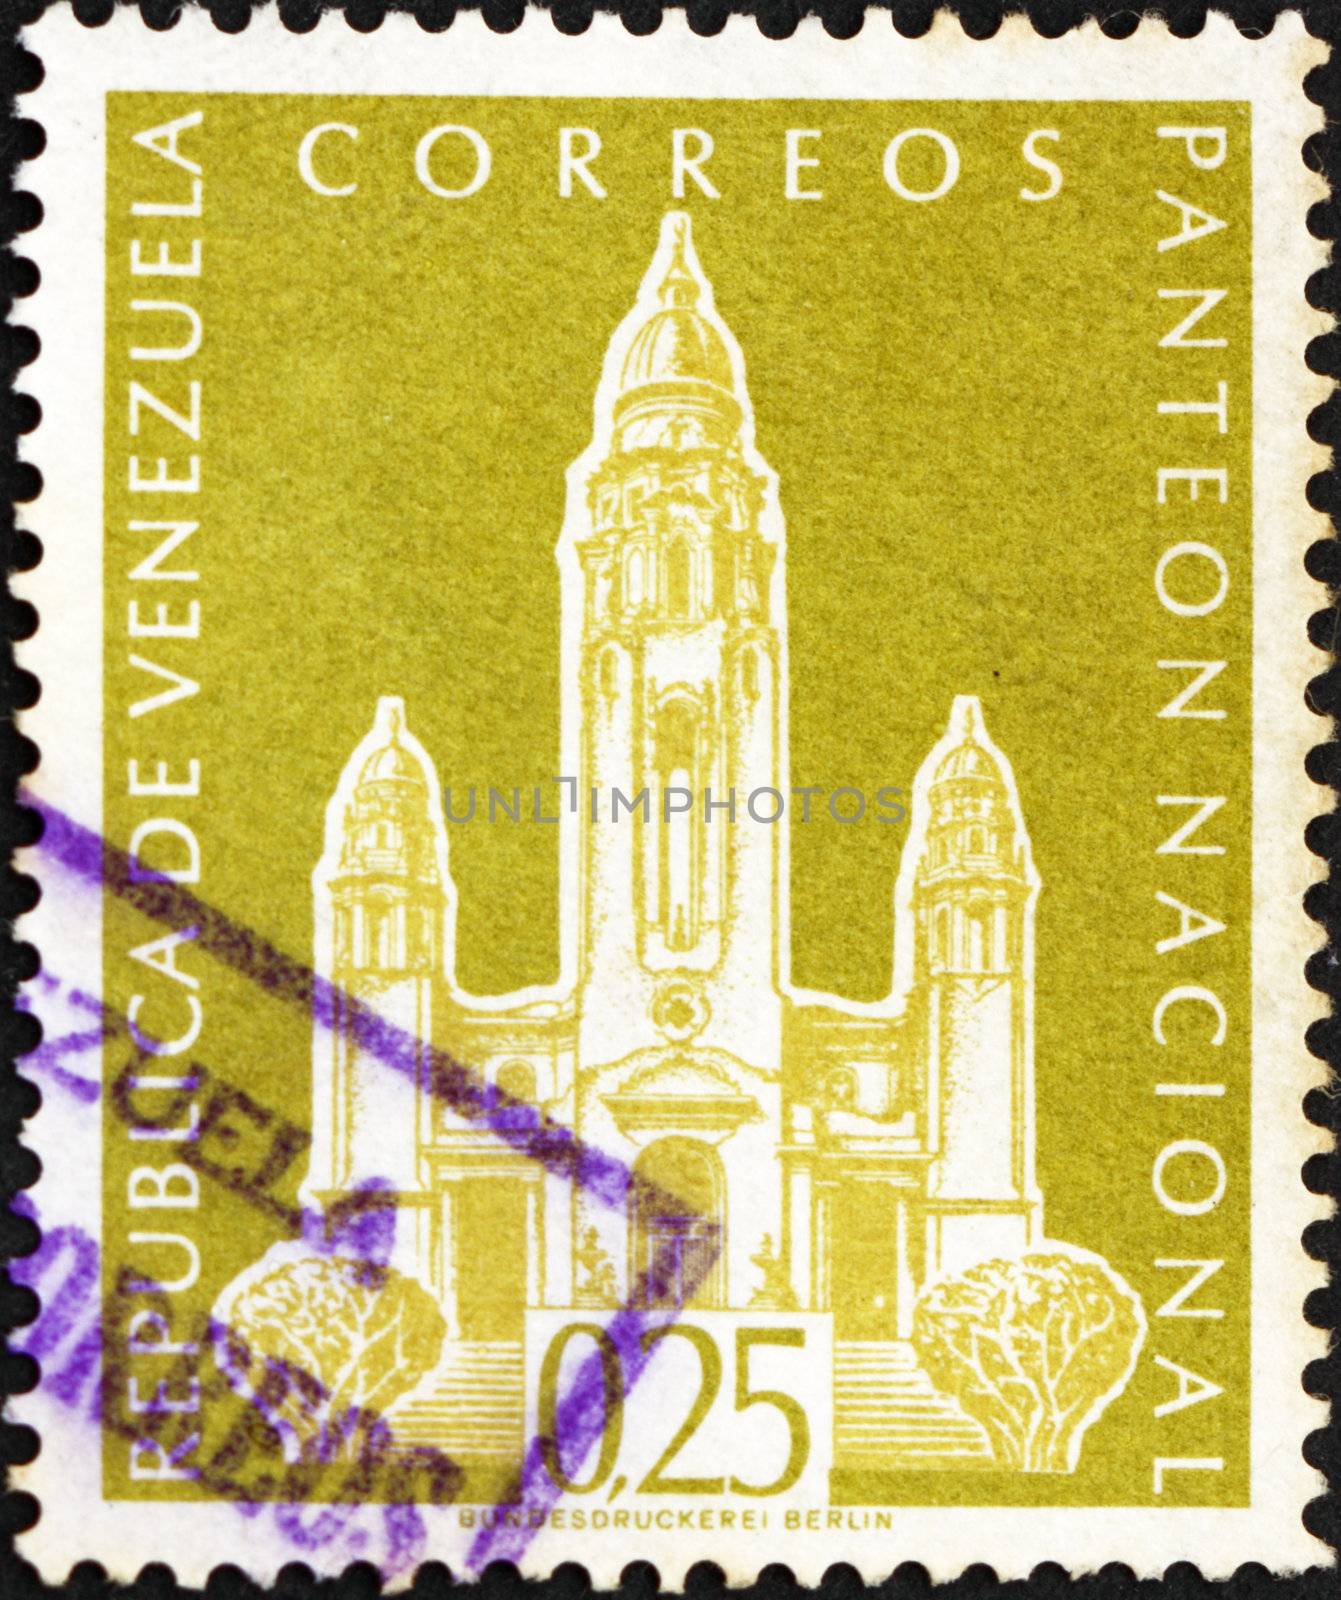 VENEZUELA - CIRCA 1960: a stamp printed in the Venezuela shows National Pantheon, Caracas, Venezuela, circa 1960